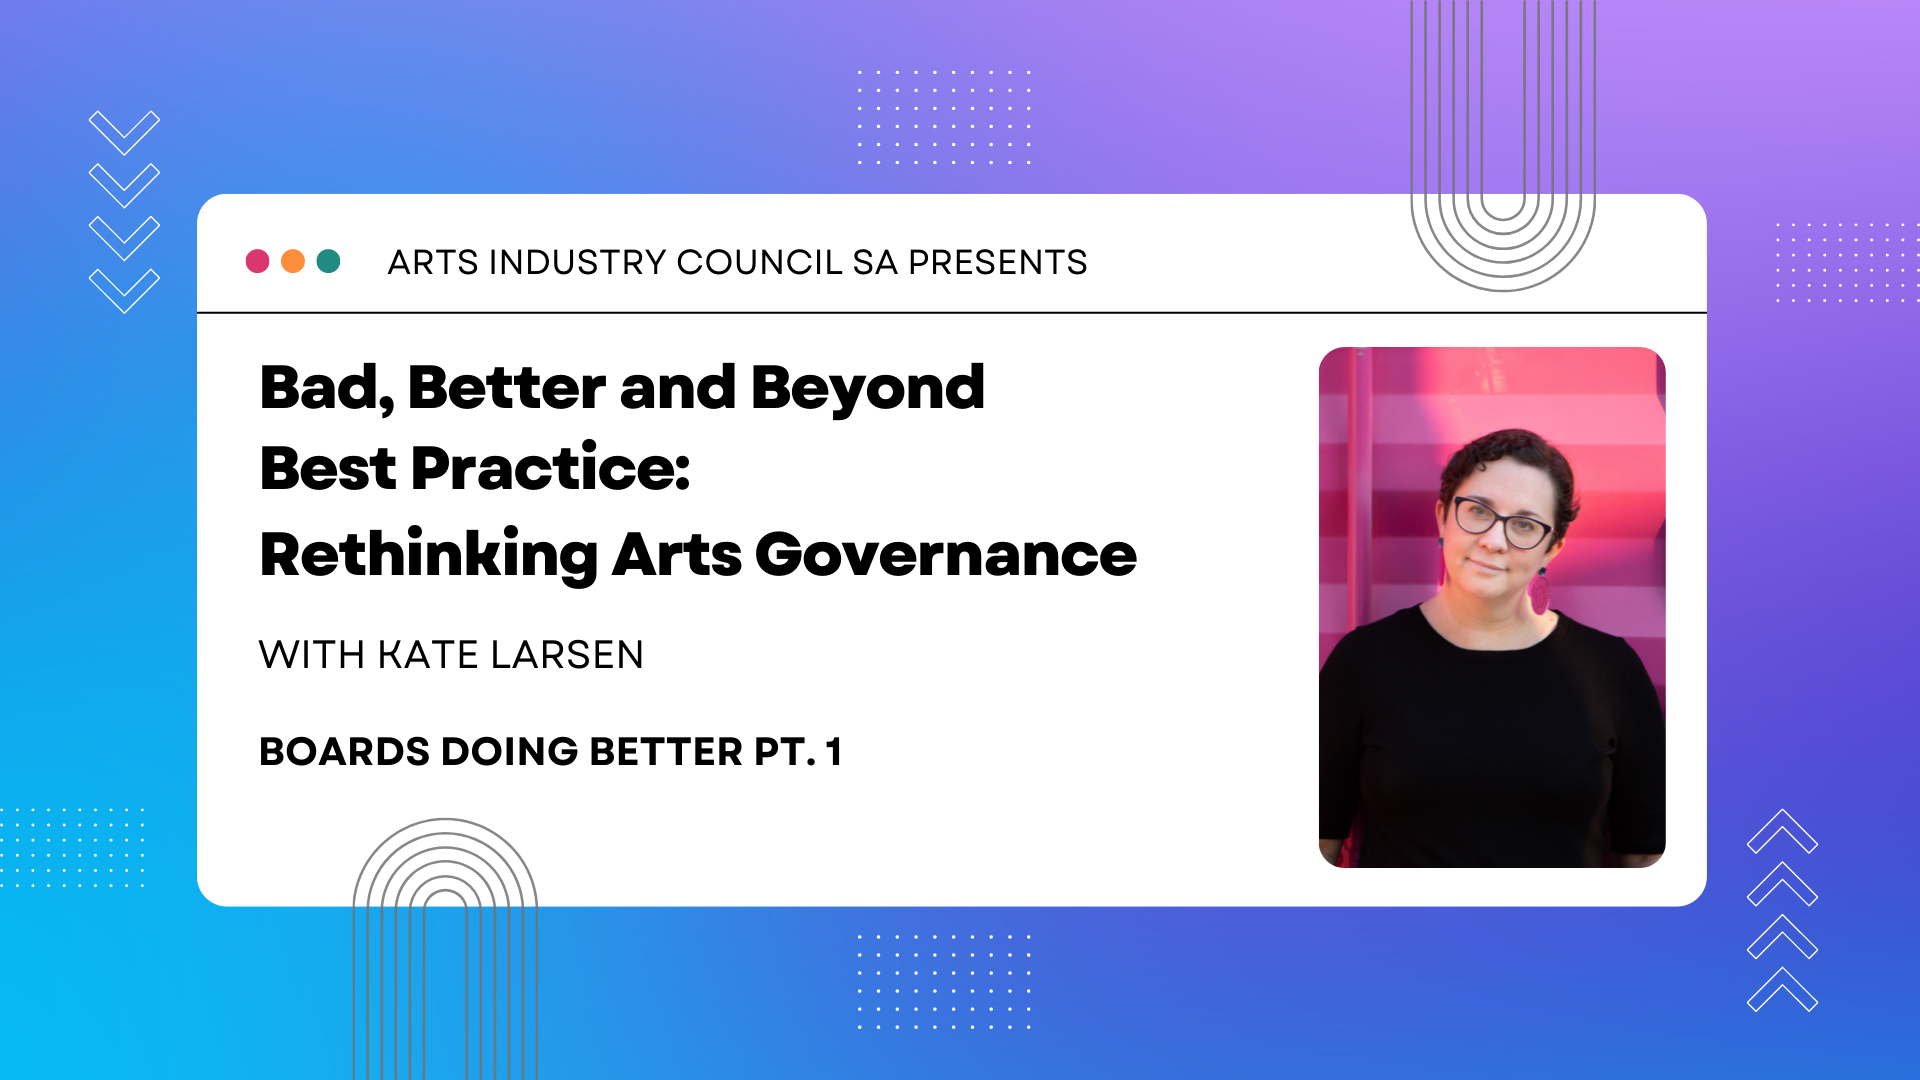 Rethinking Arts Governance: Session 2, Part 1 Boards Doing Better